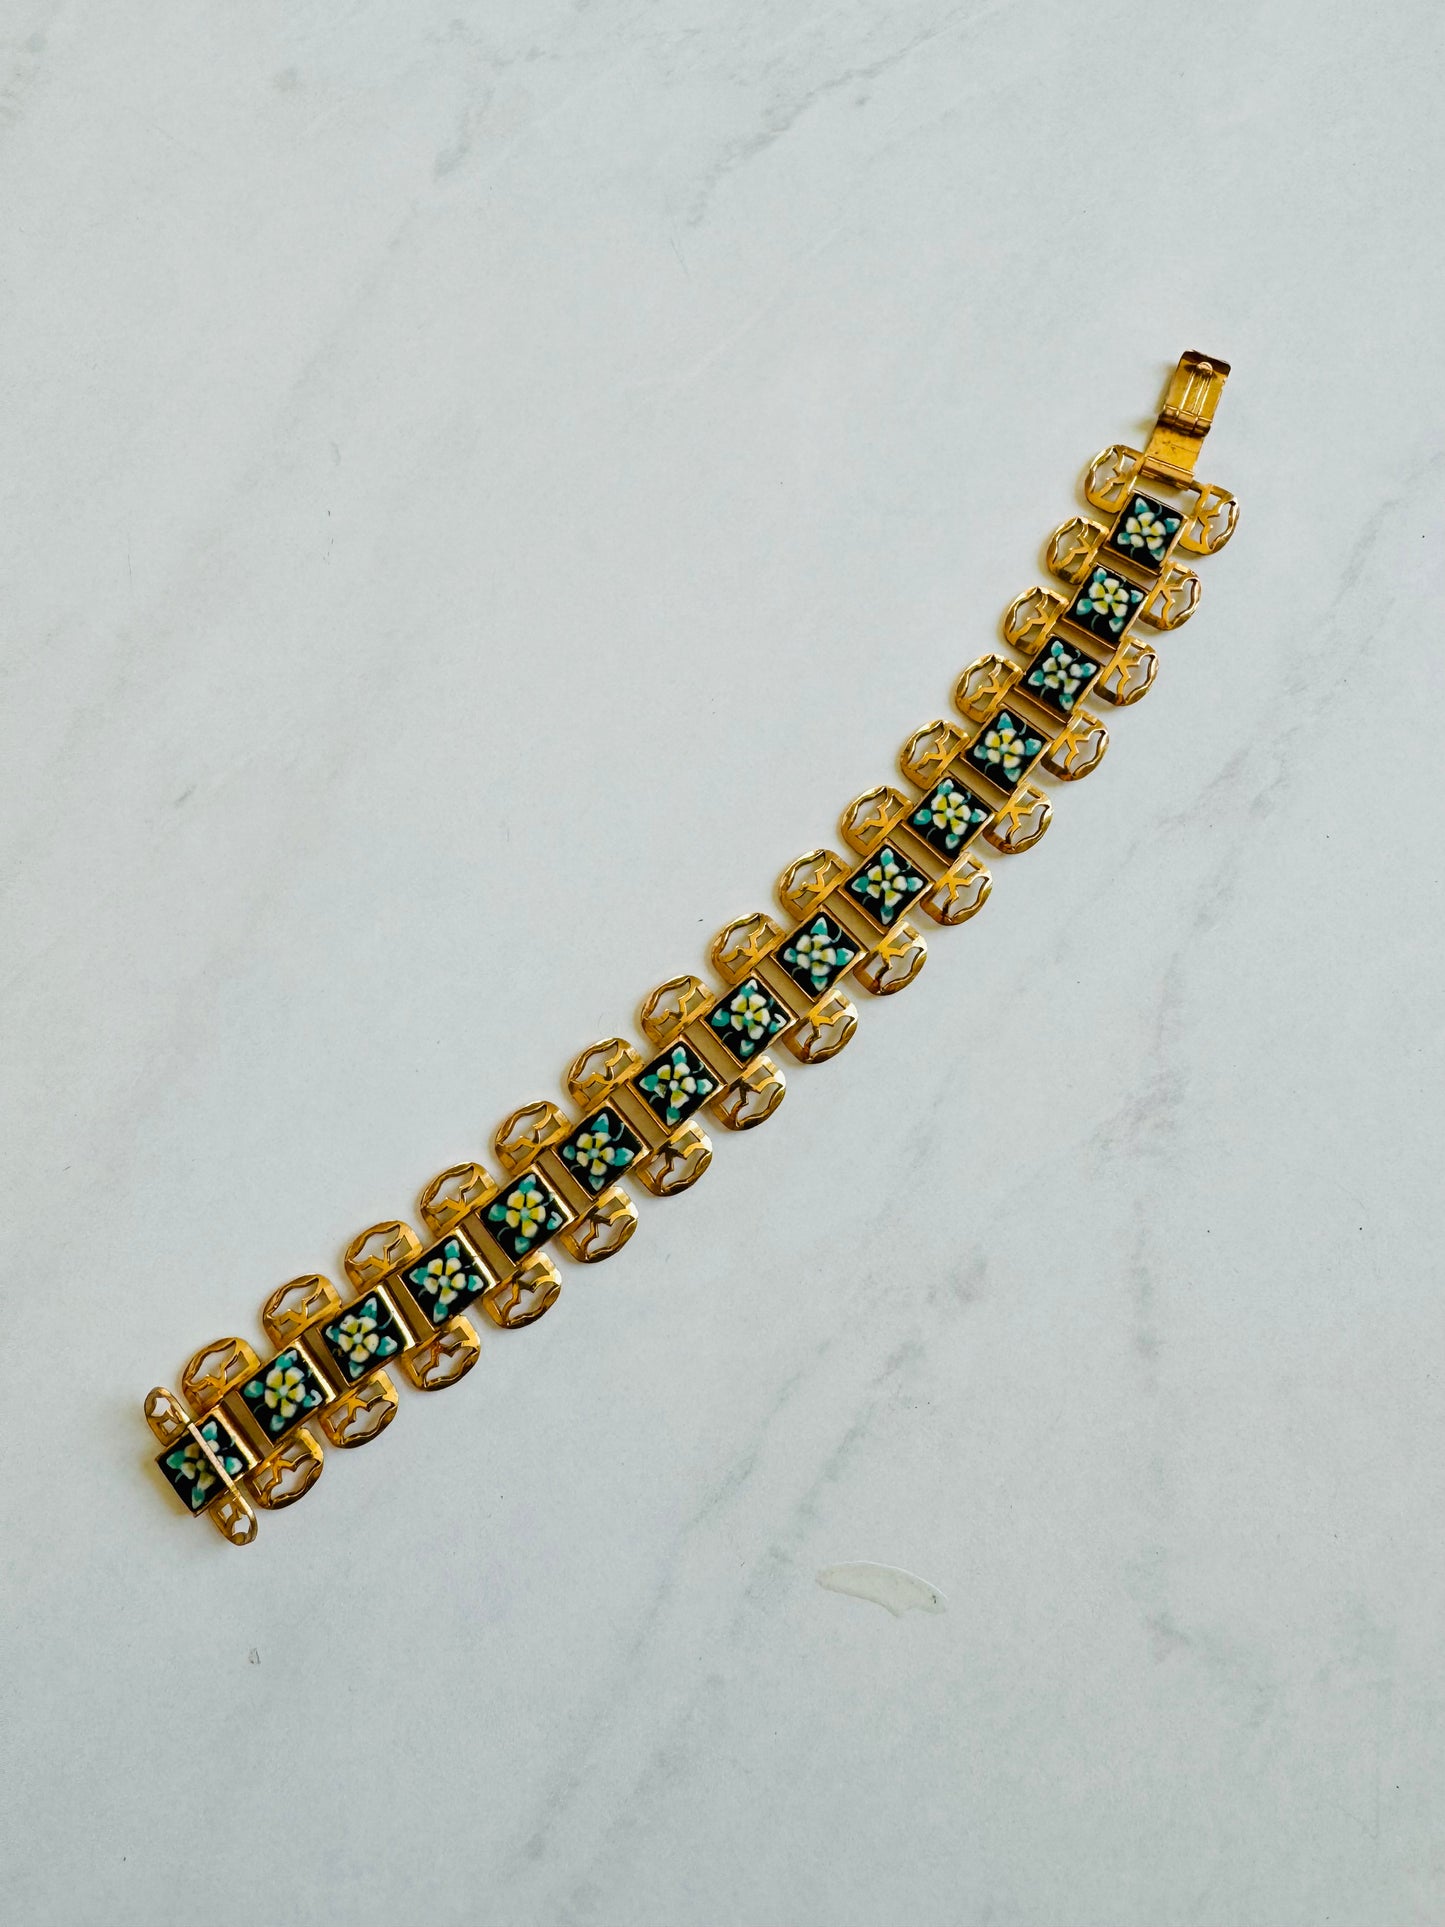 Gorgeous vintage gold tone and enamel flower bracelet